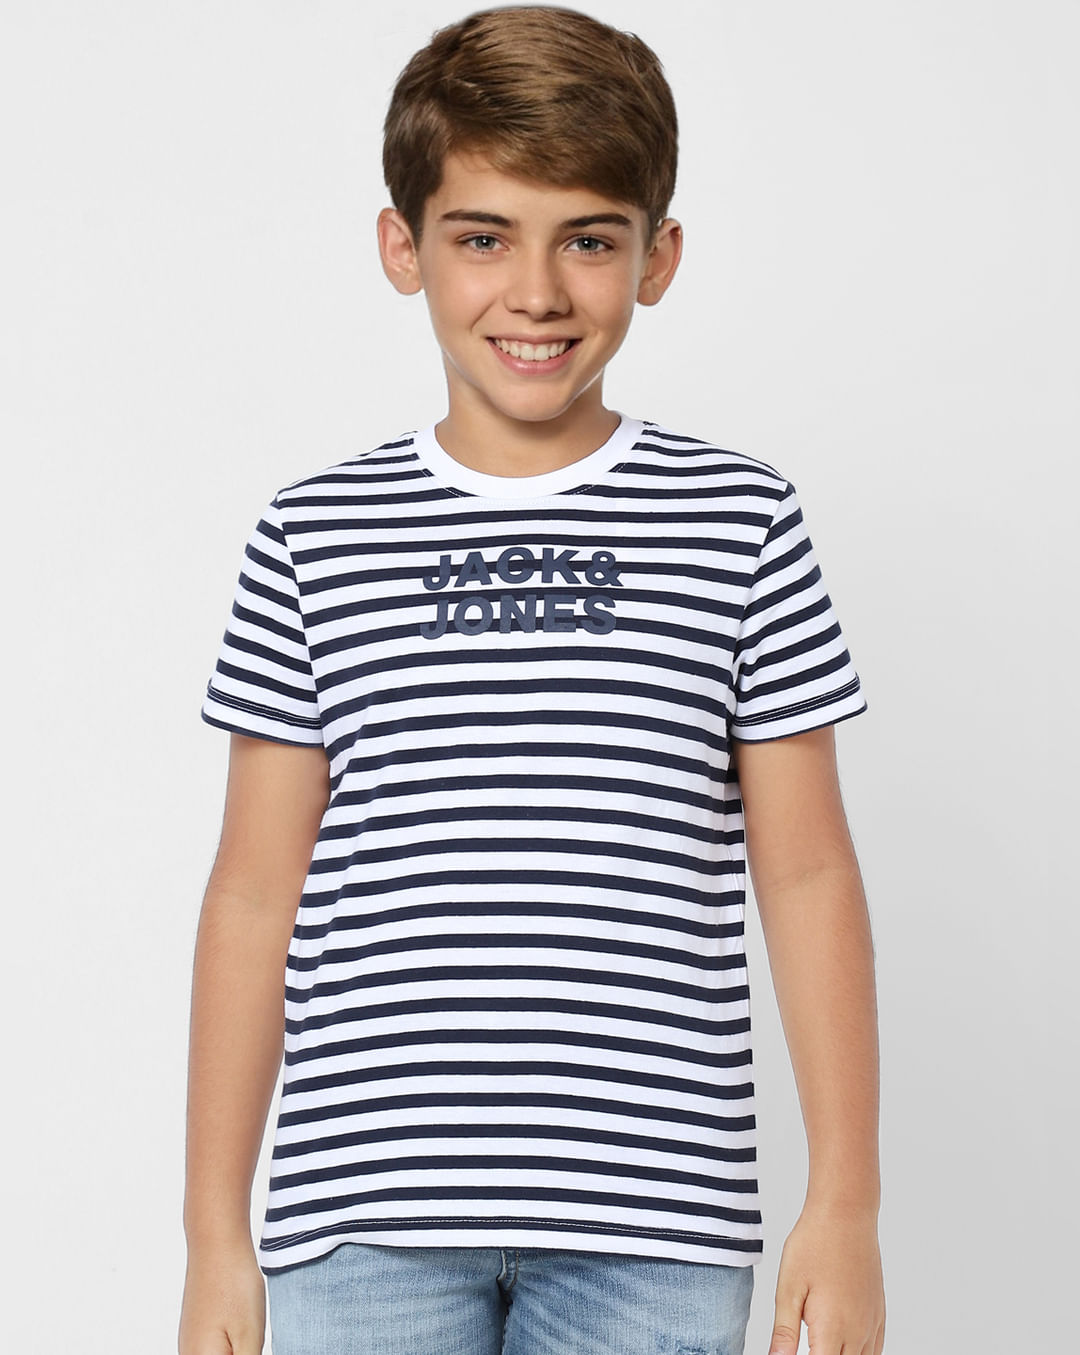 Buy Navy Blue Striped Crew Neck T-shirt for Boys Online at Jack&Jones ...